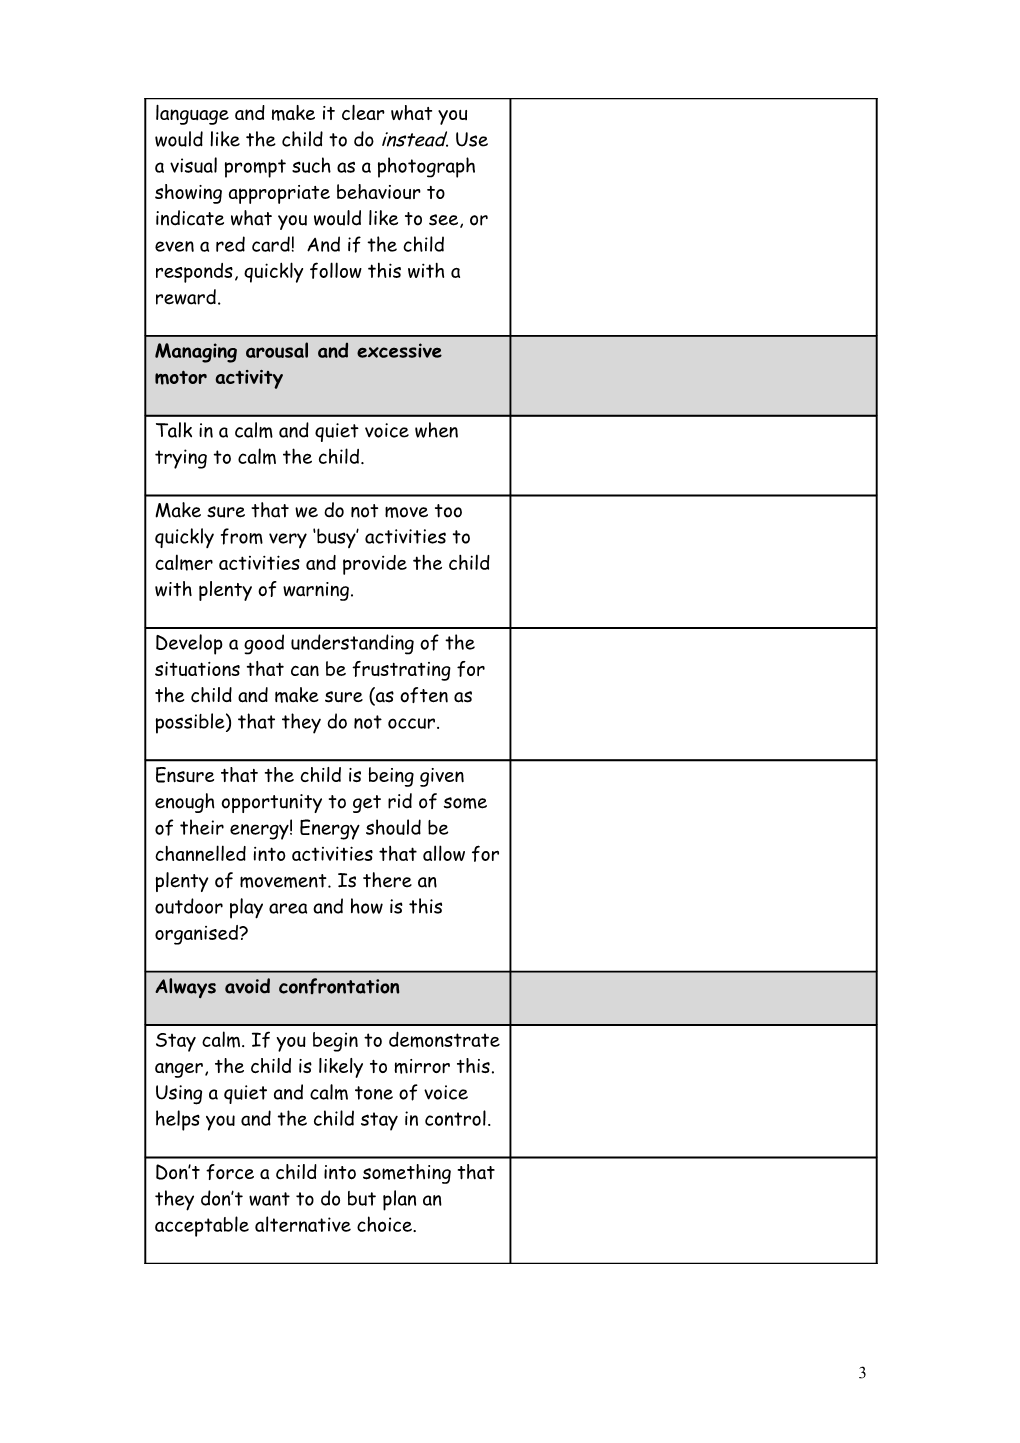 Checklist of Strategies